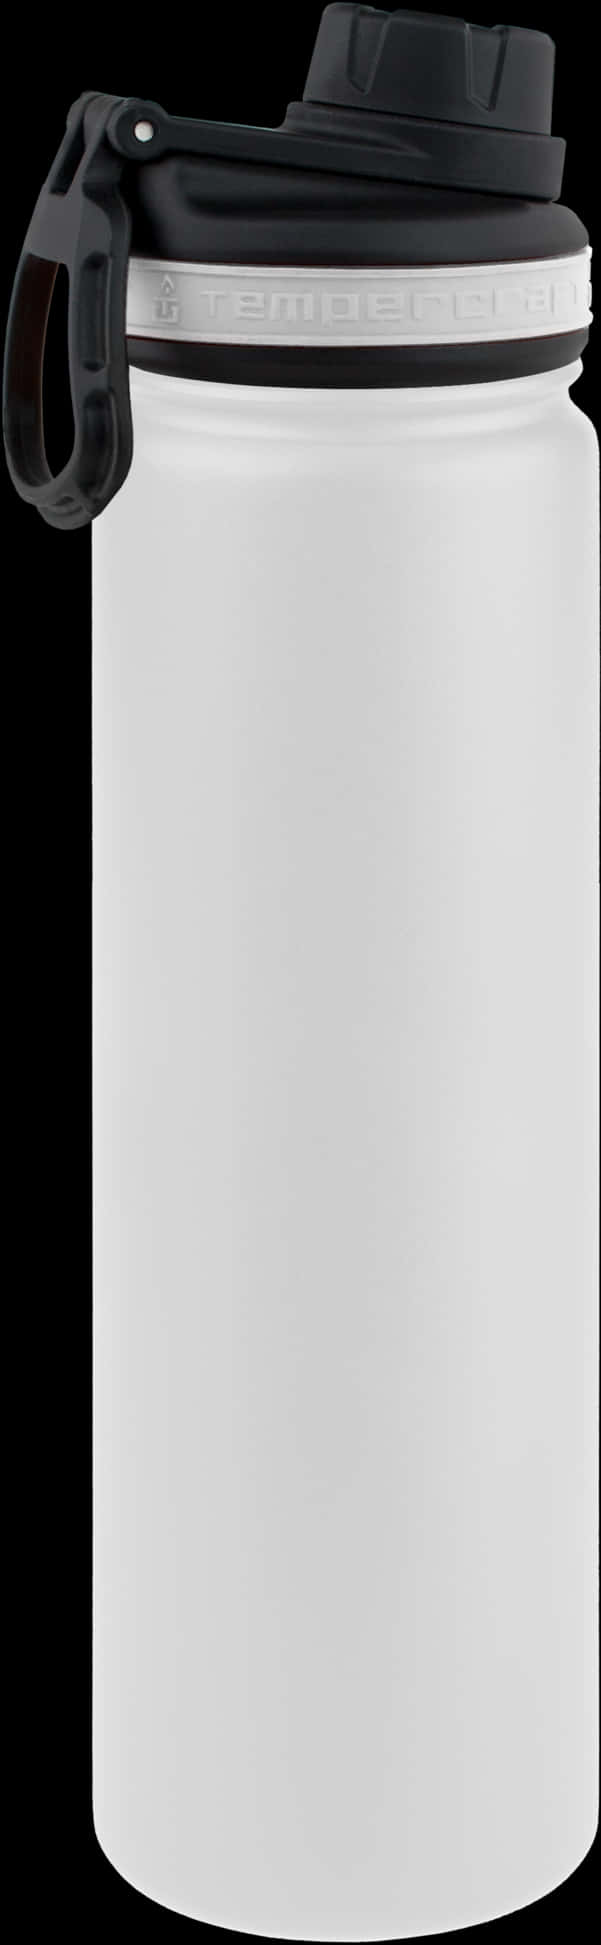 Plain White Tumbler With Black Details